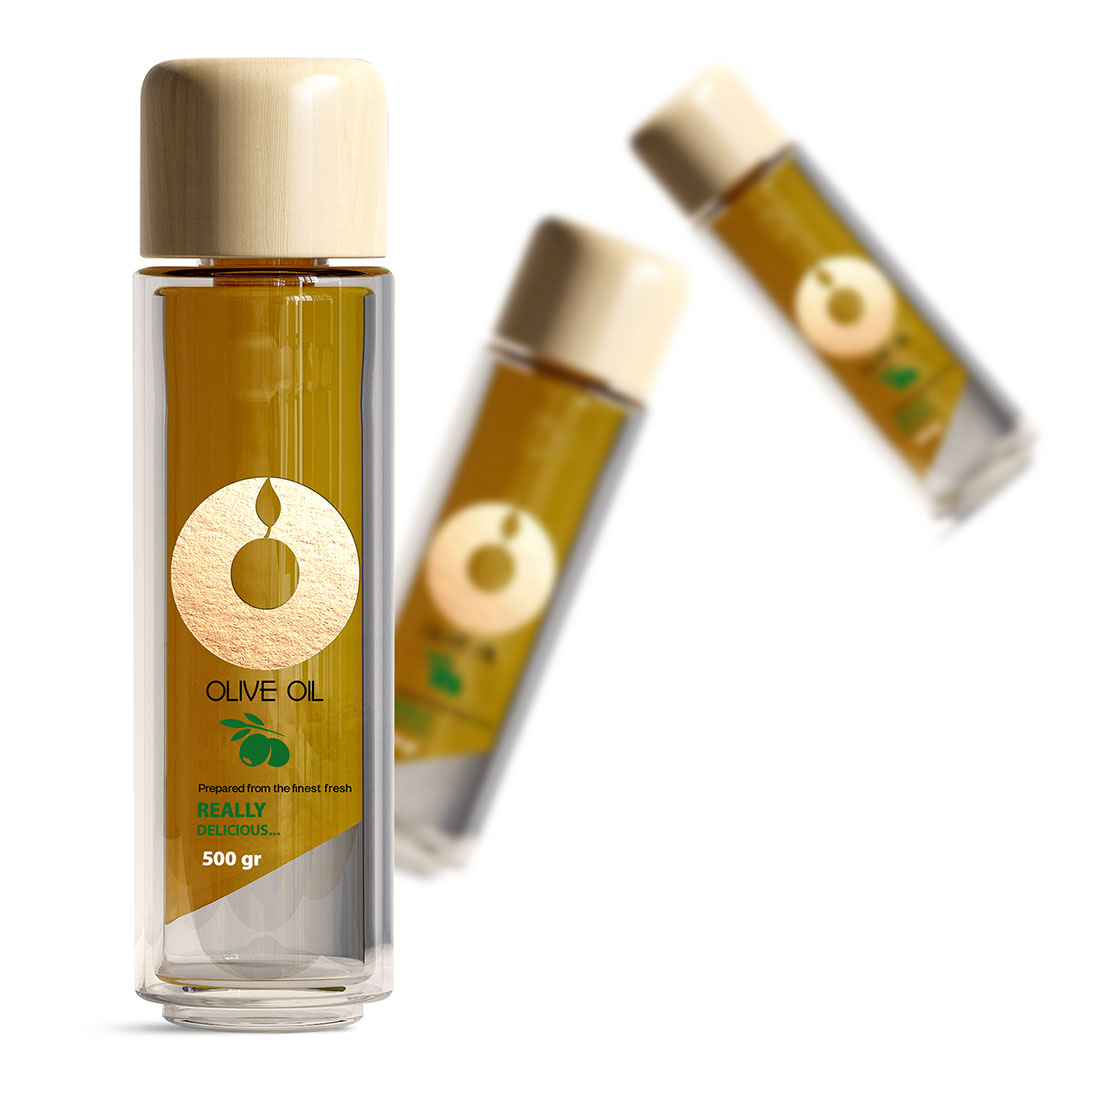 Taha Fakouri creat new oile oil bottle and label Design Concept